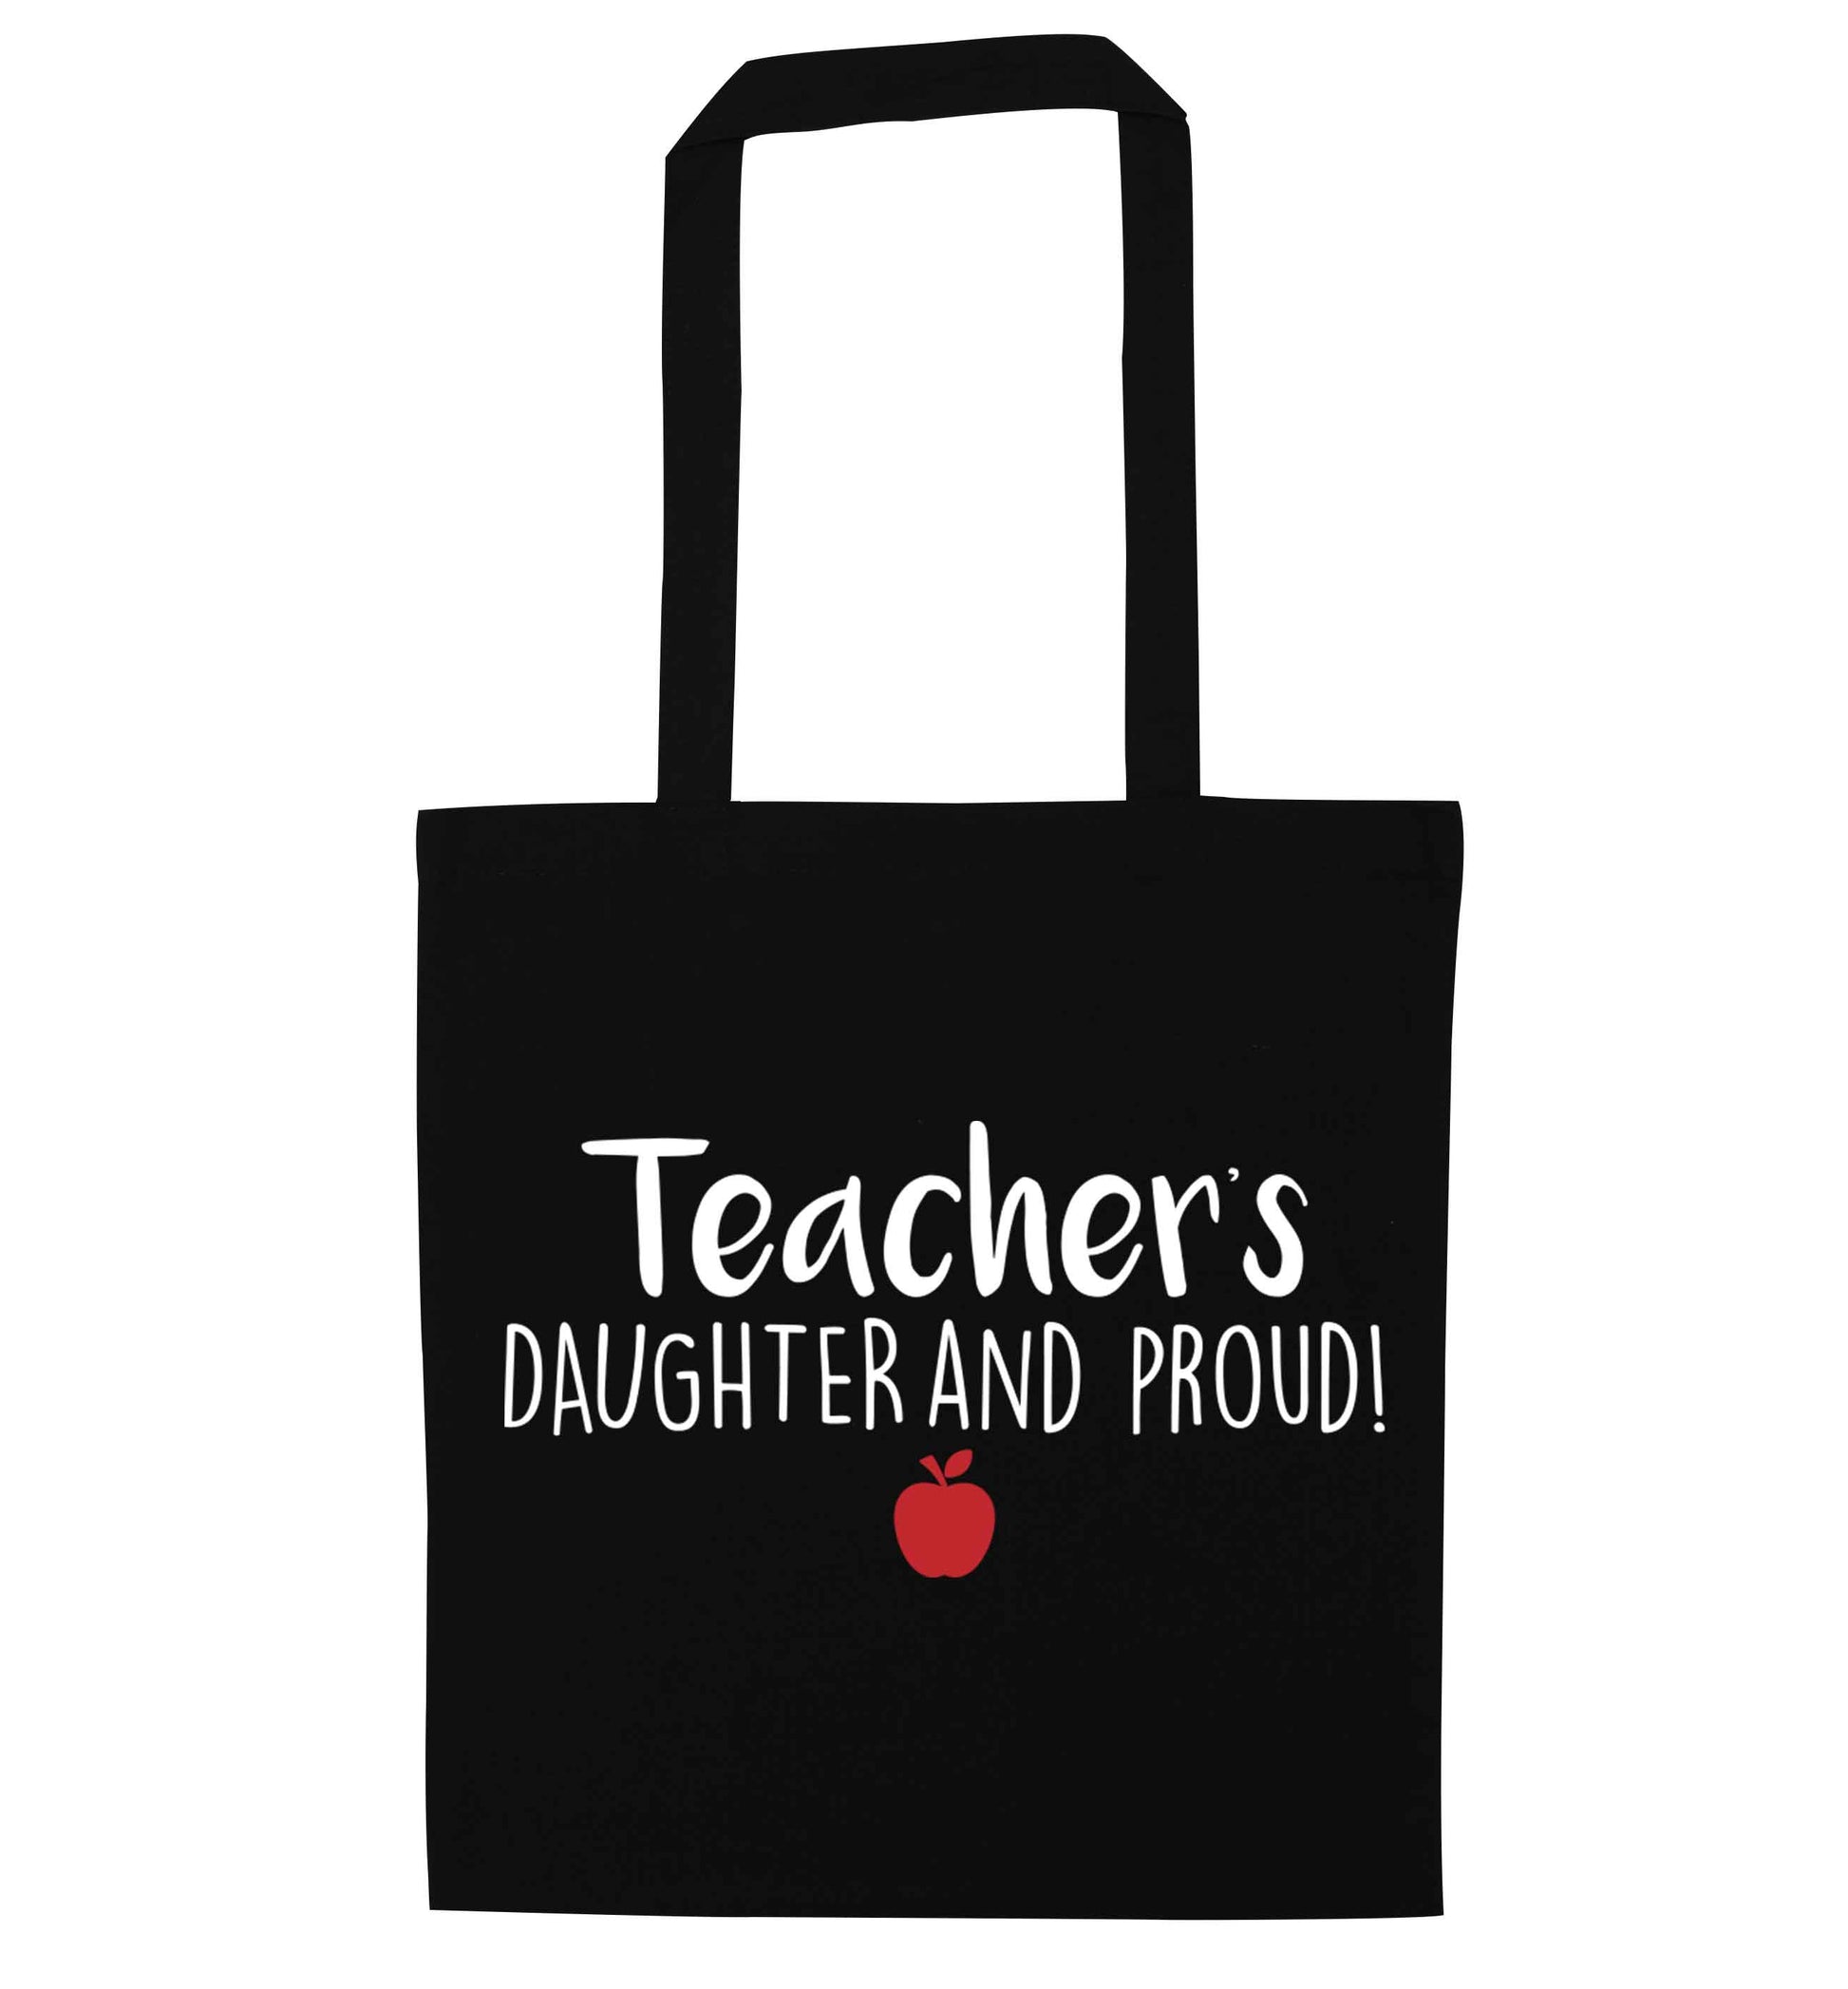 Teachers daughter and proud black tote bag